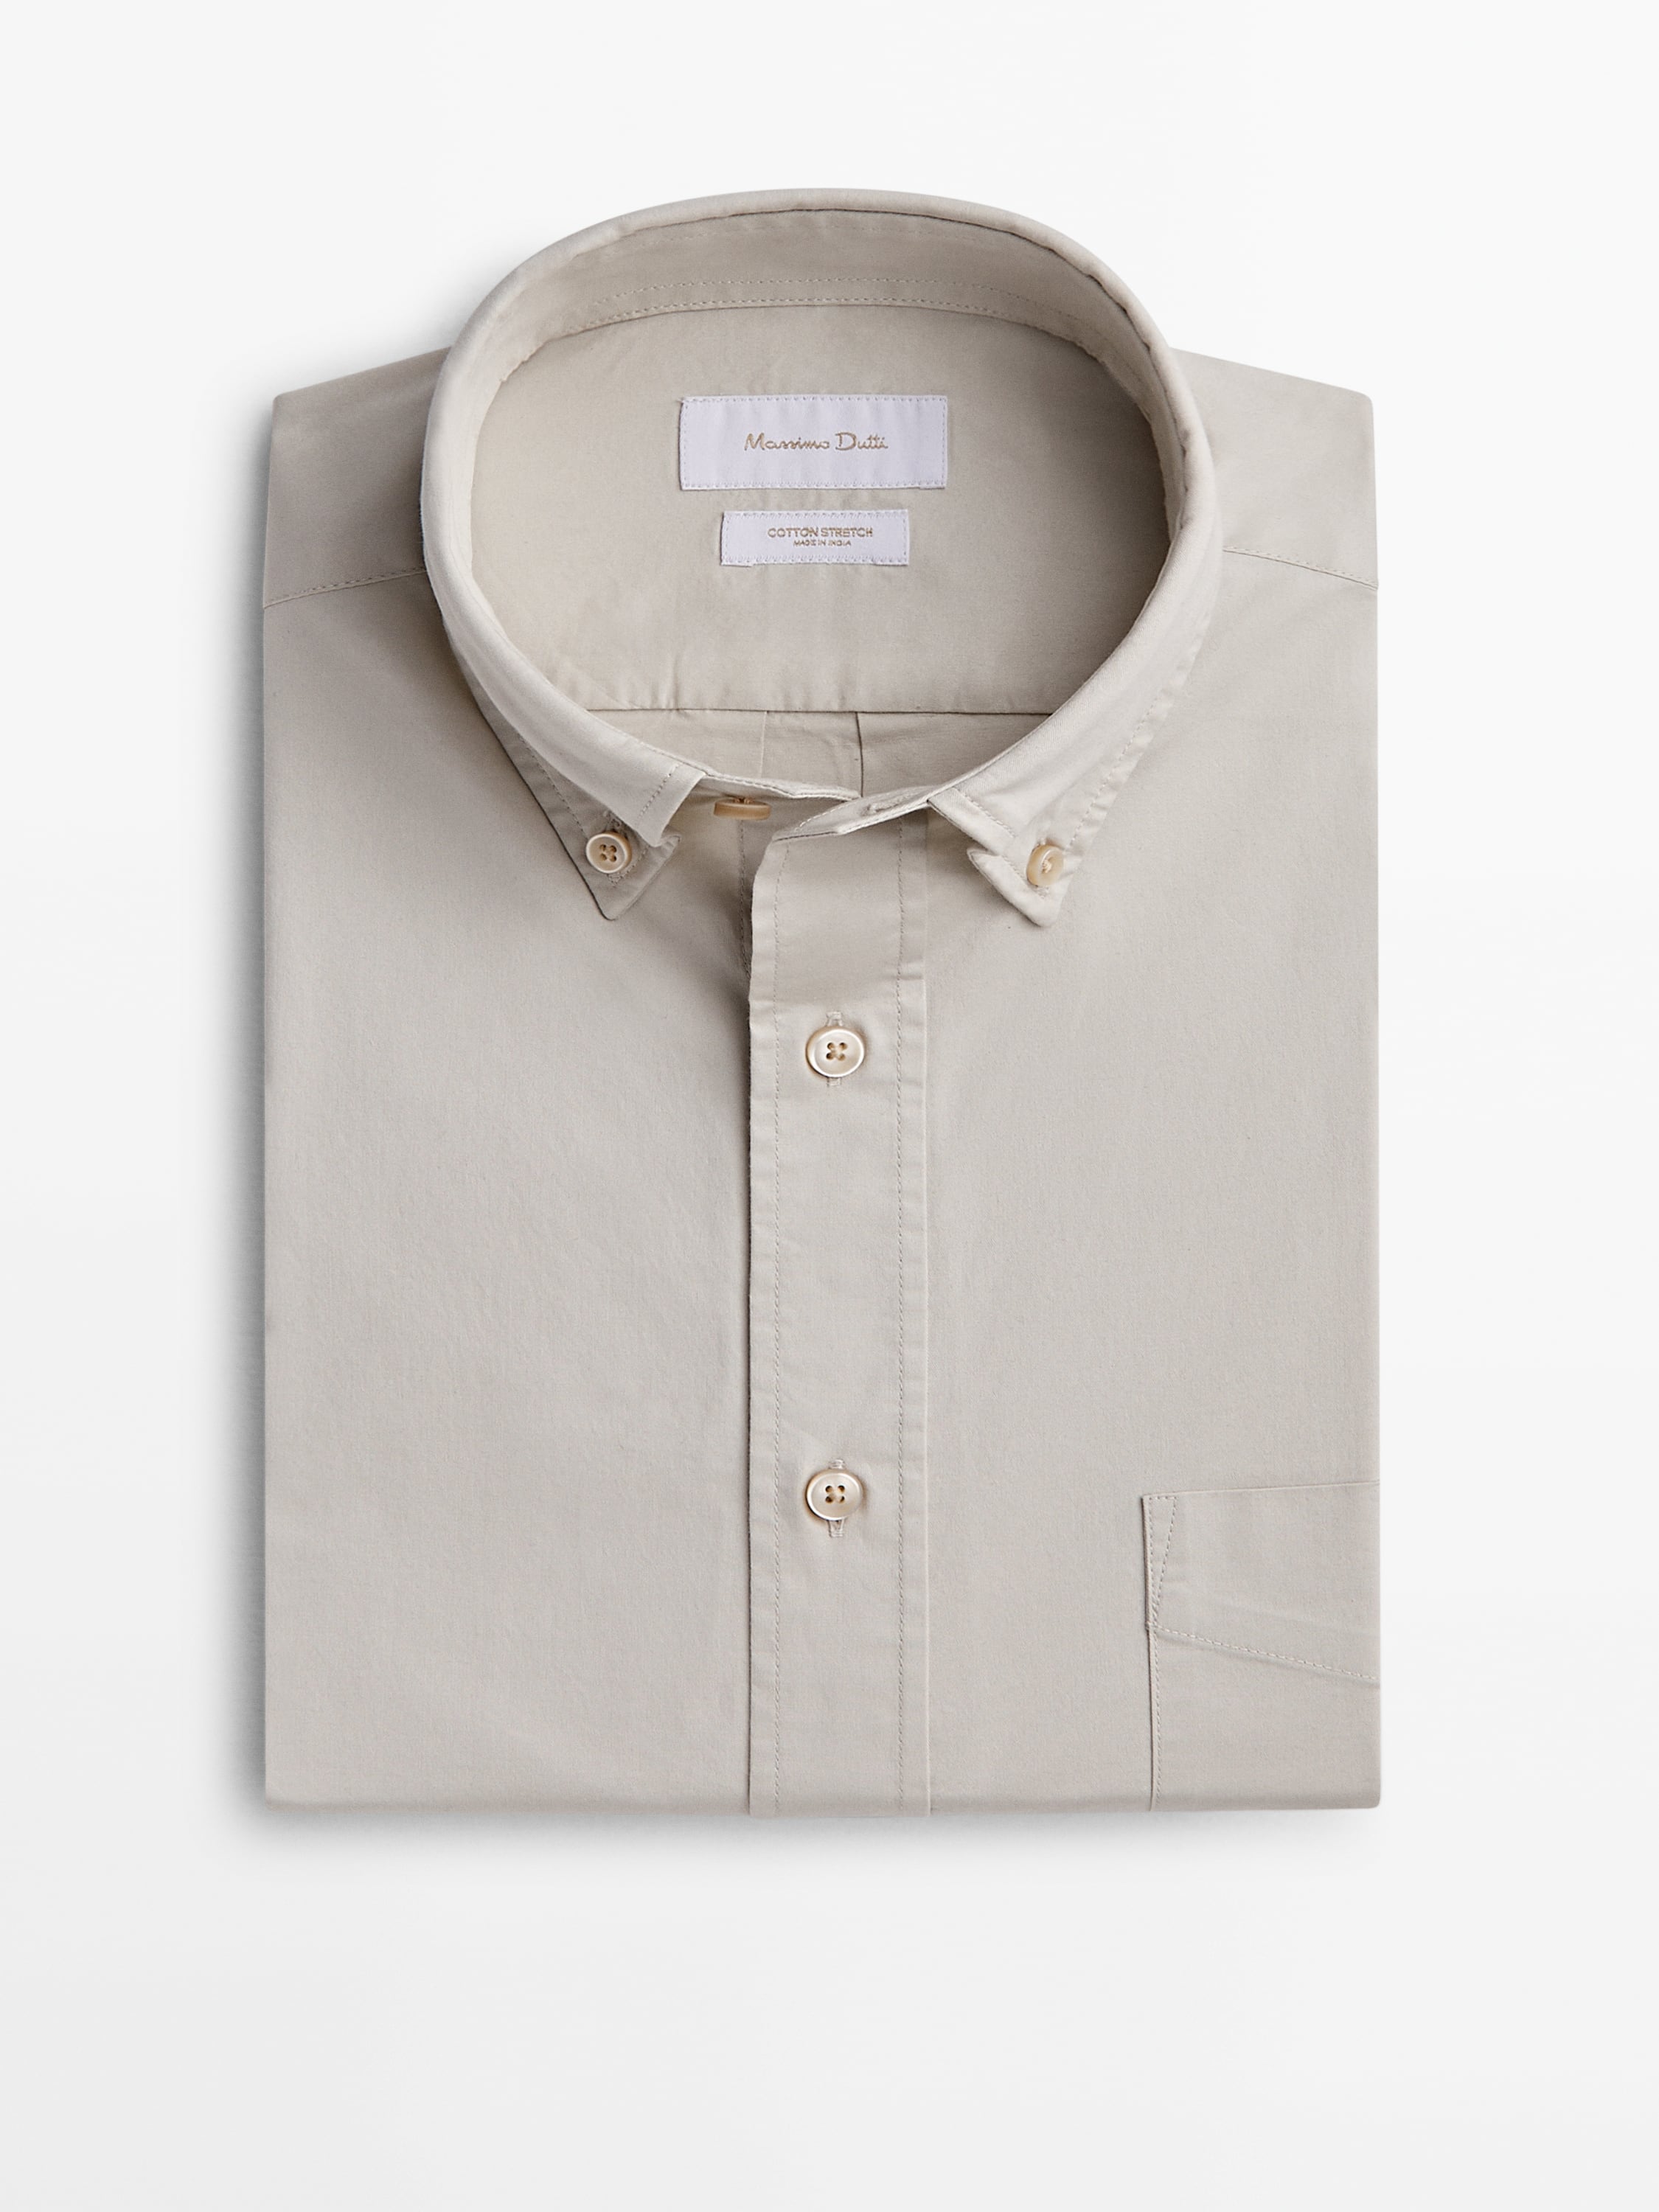 Regular fit stretchy cotton blend shirt with pocket